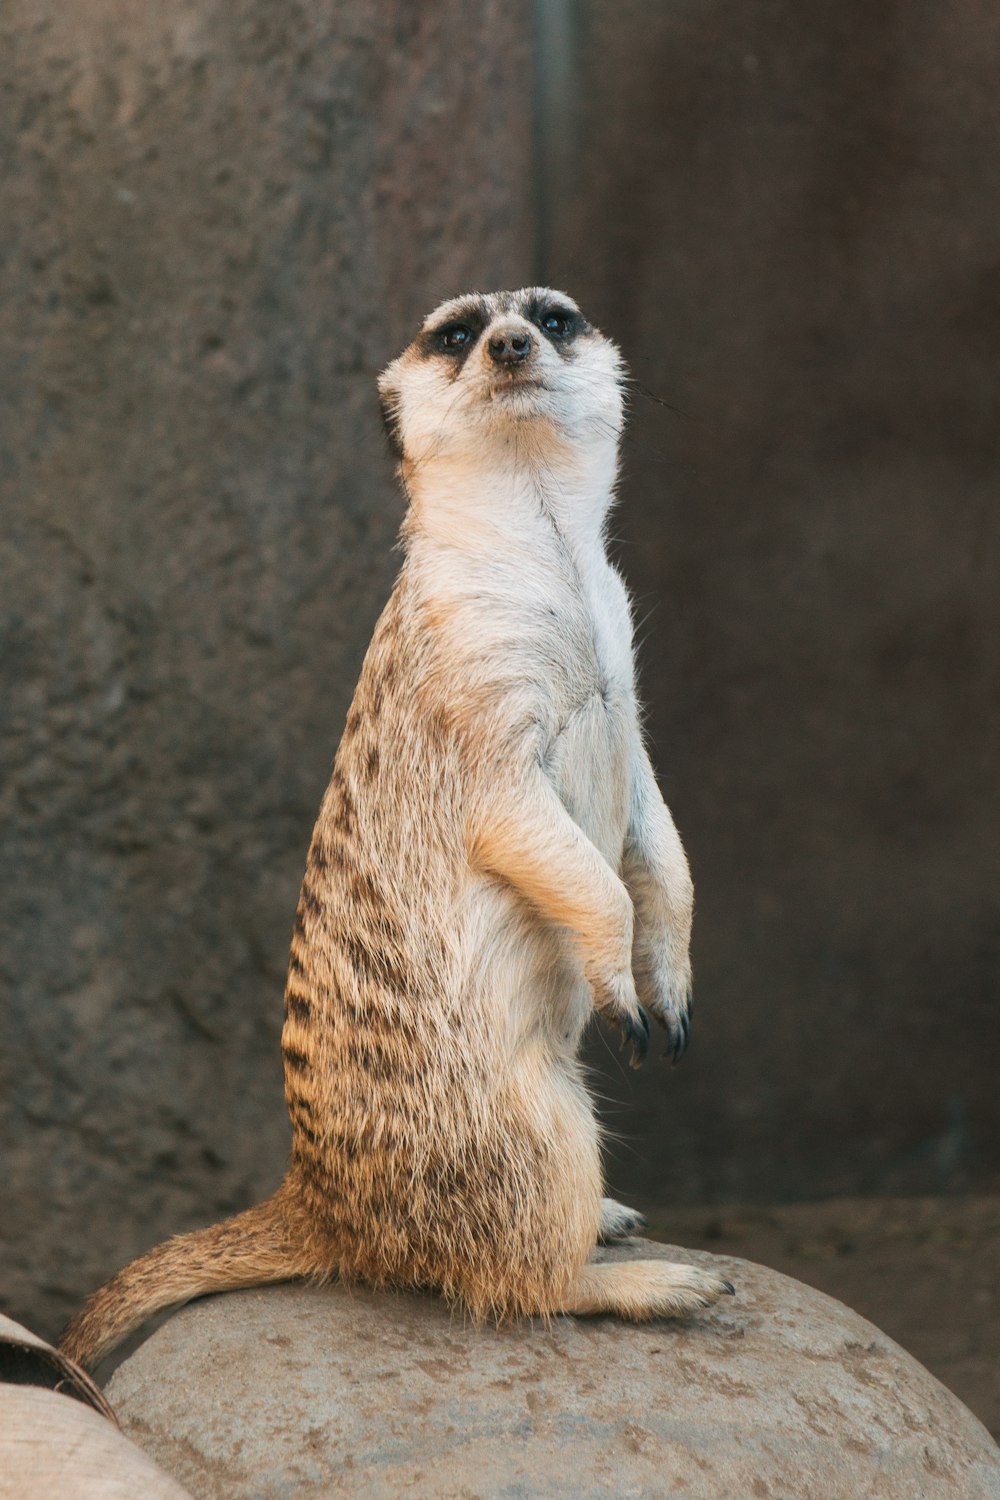 A small animal standing on its hind legs photo – Free Kangaroo Image on  Unsplash